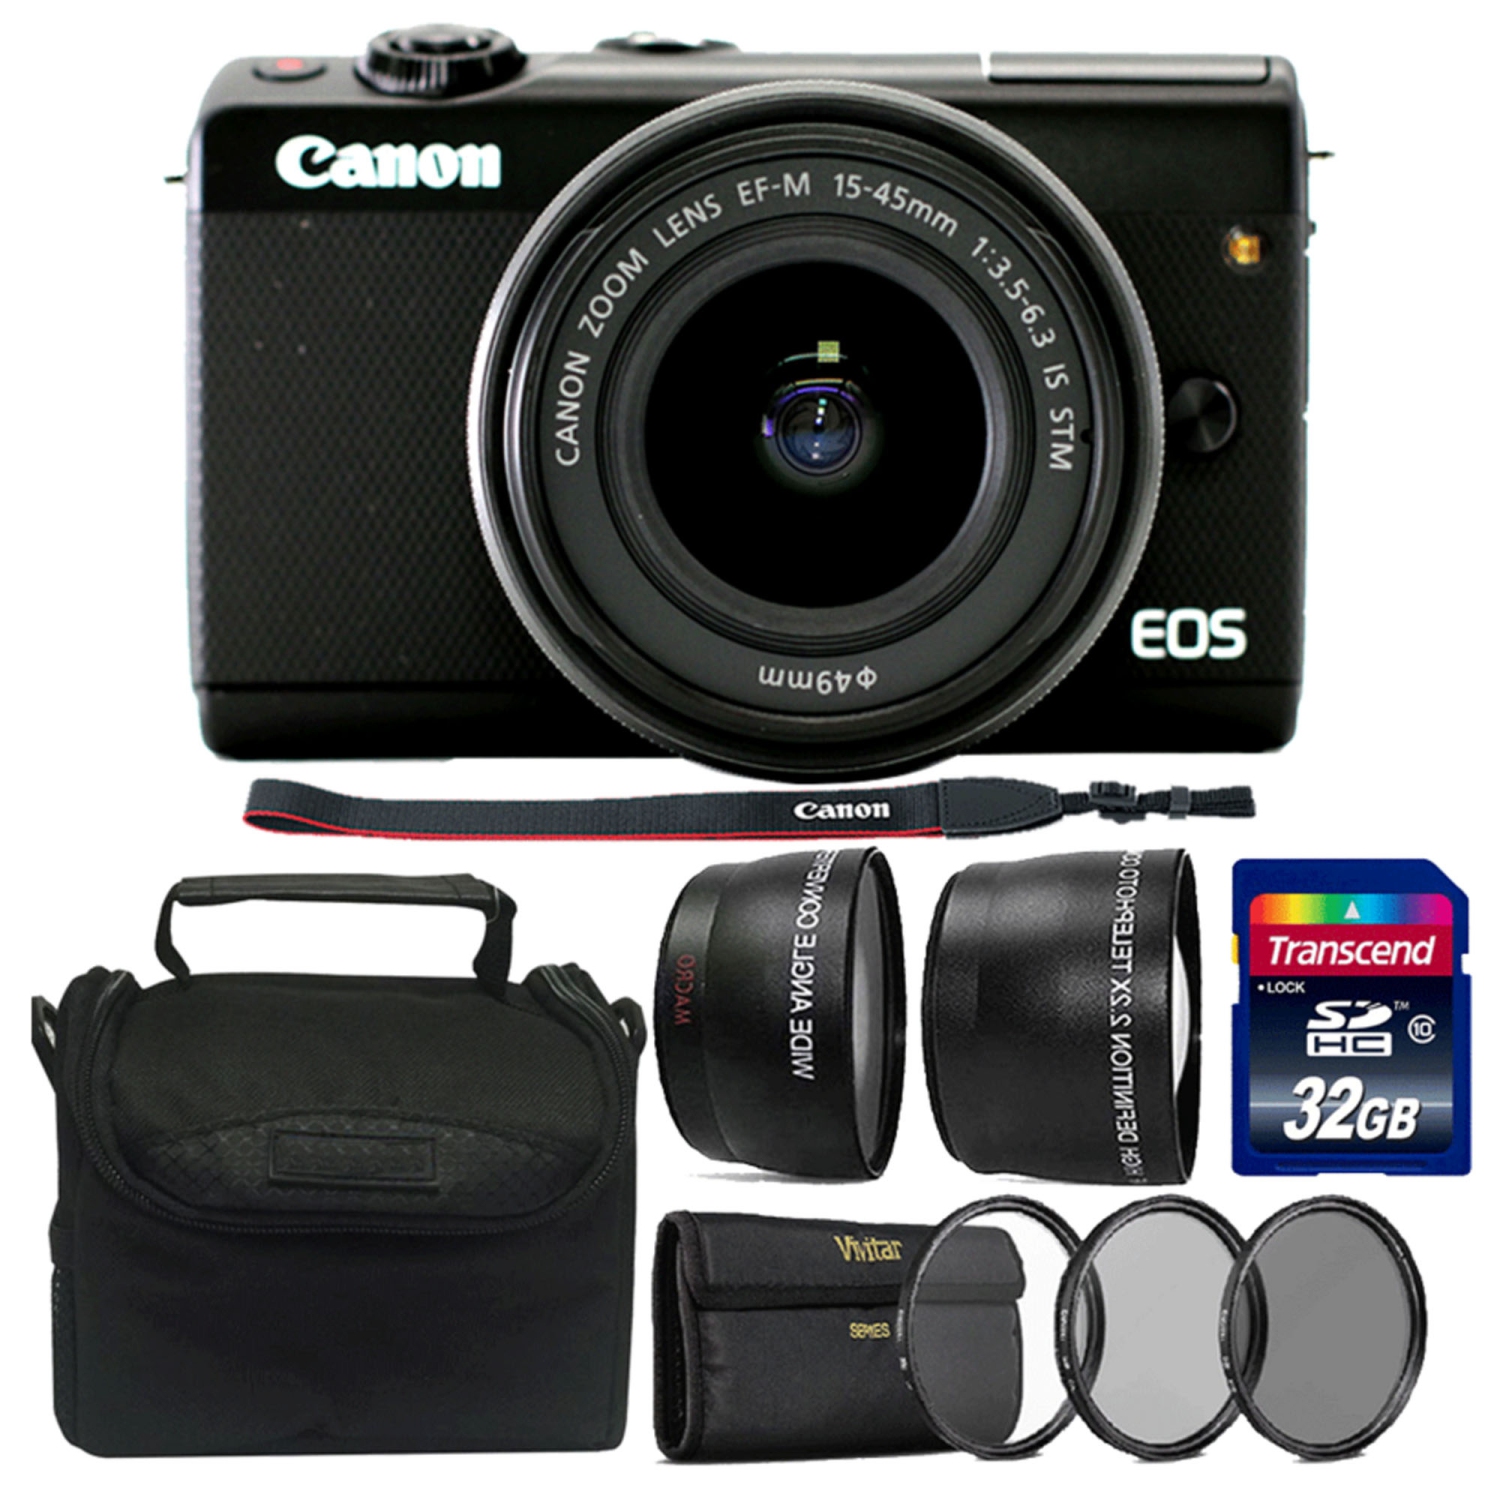 Canon PowerShot G7 X Mark III Digital Camera (Black) with 64GB Accessory Bundle - US Version w/ Seller Warranty